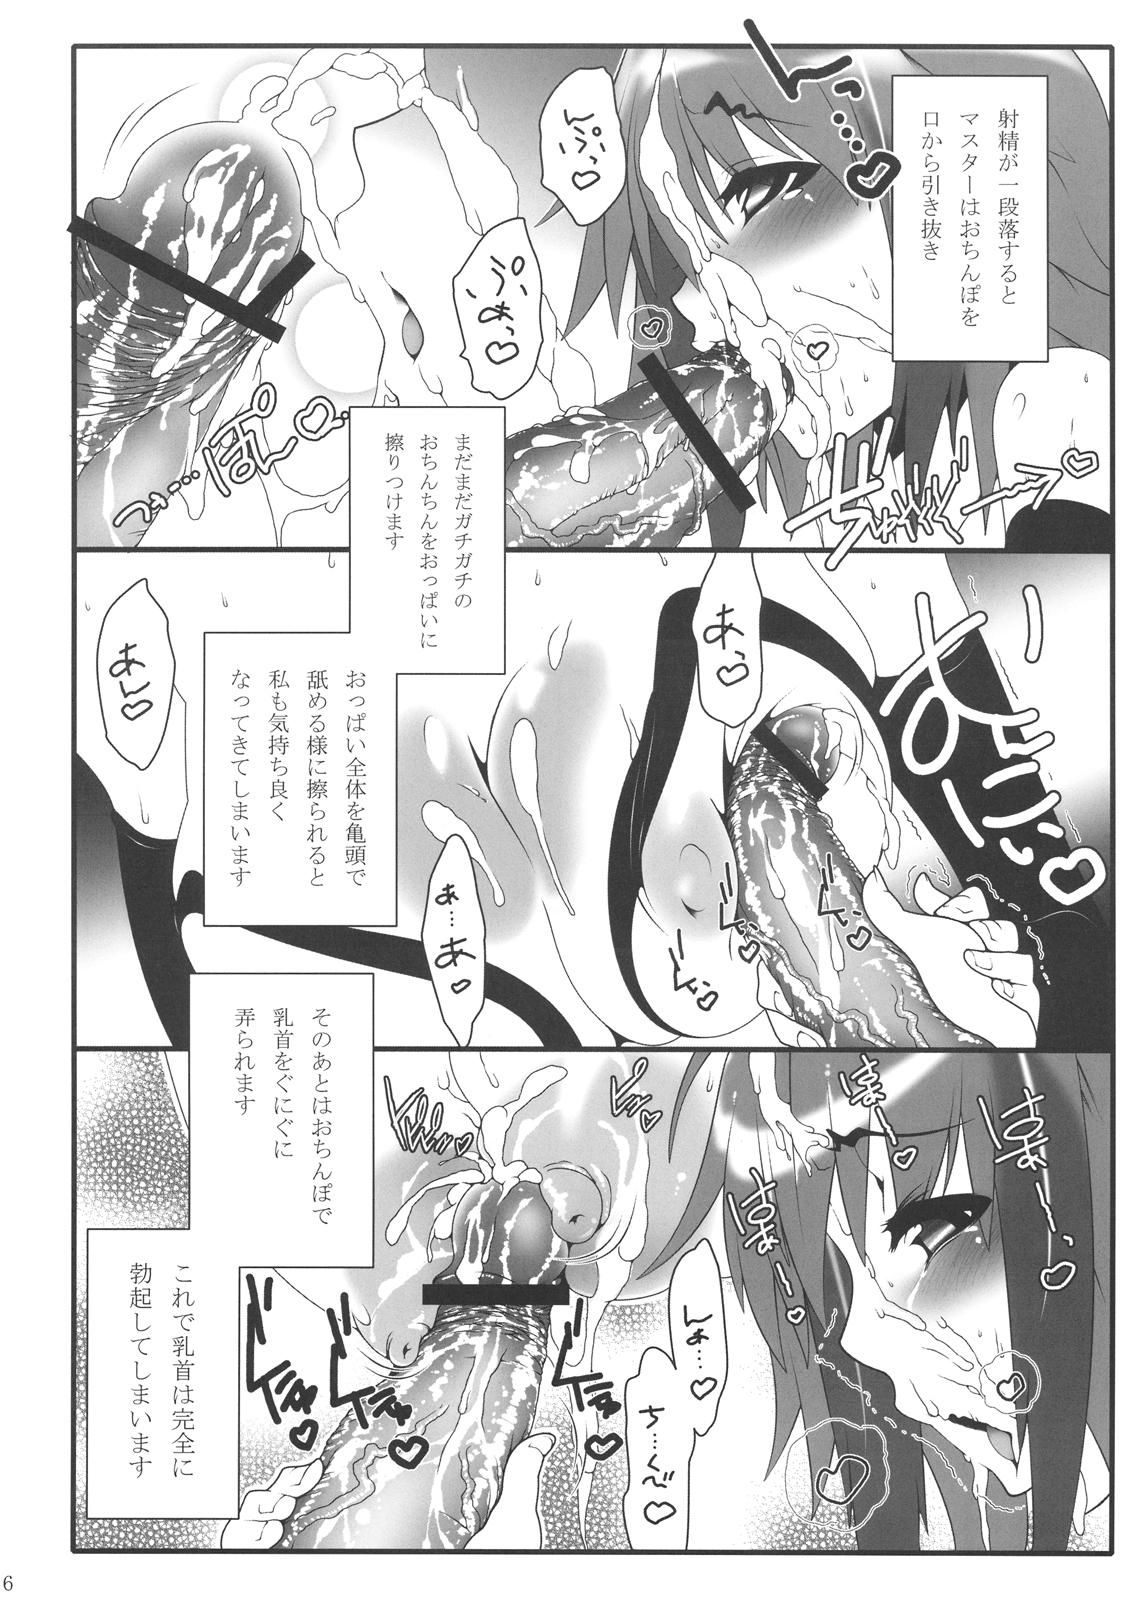 Ano Ikaros-san to. - Sora no otoshimono Reality - Page 6